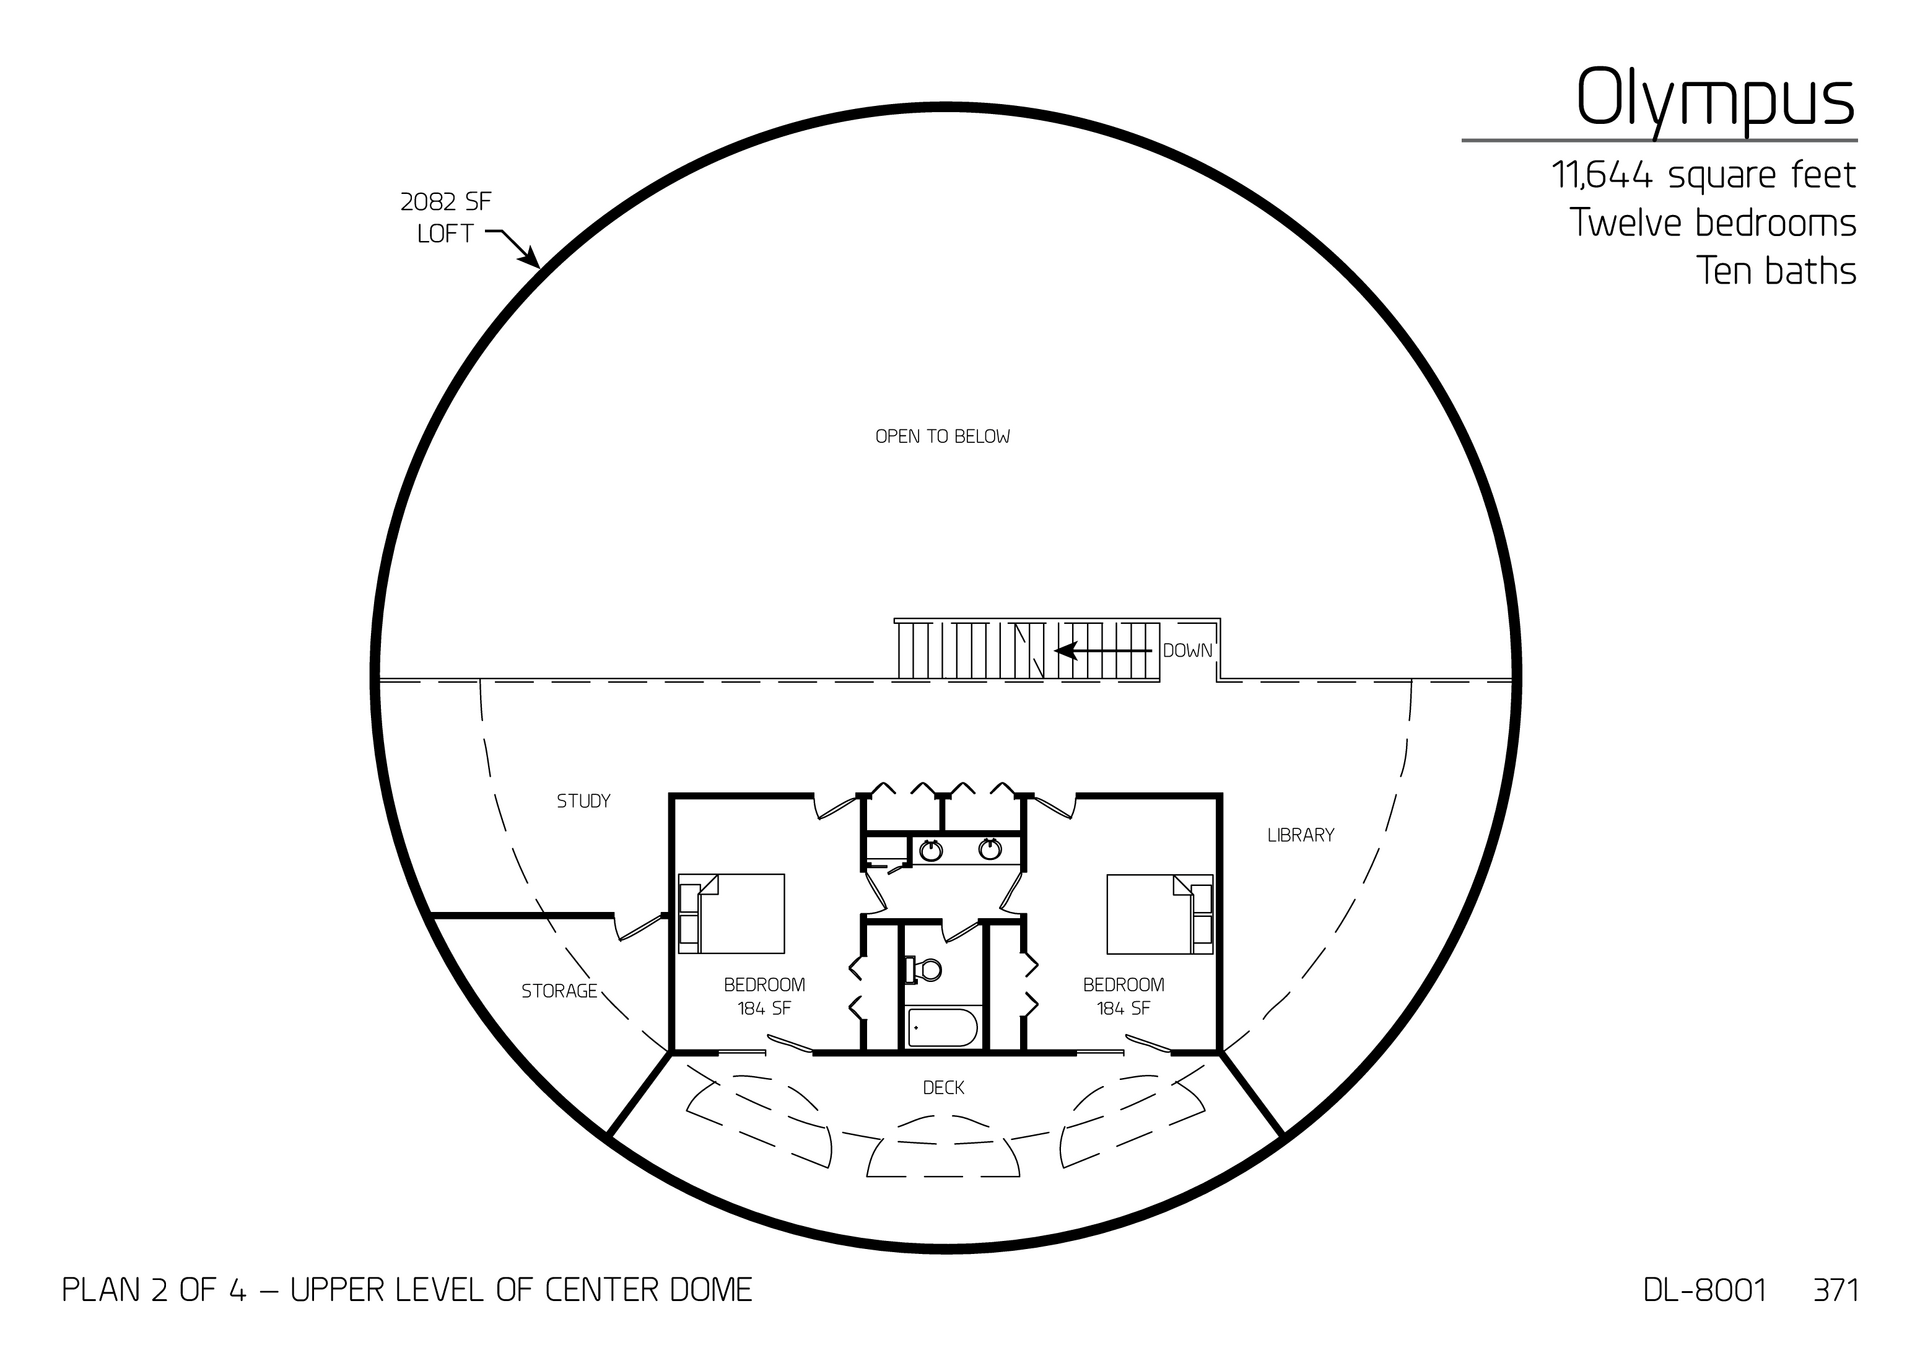 Olympus: Top Floor of Main Dome, Part of an 11,644 SF, Twelve-Bedroom, 10-Bath Floor Plan.